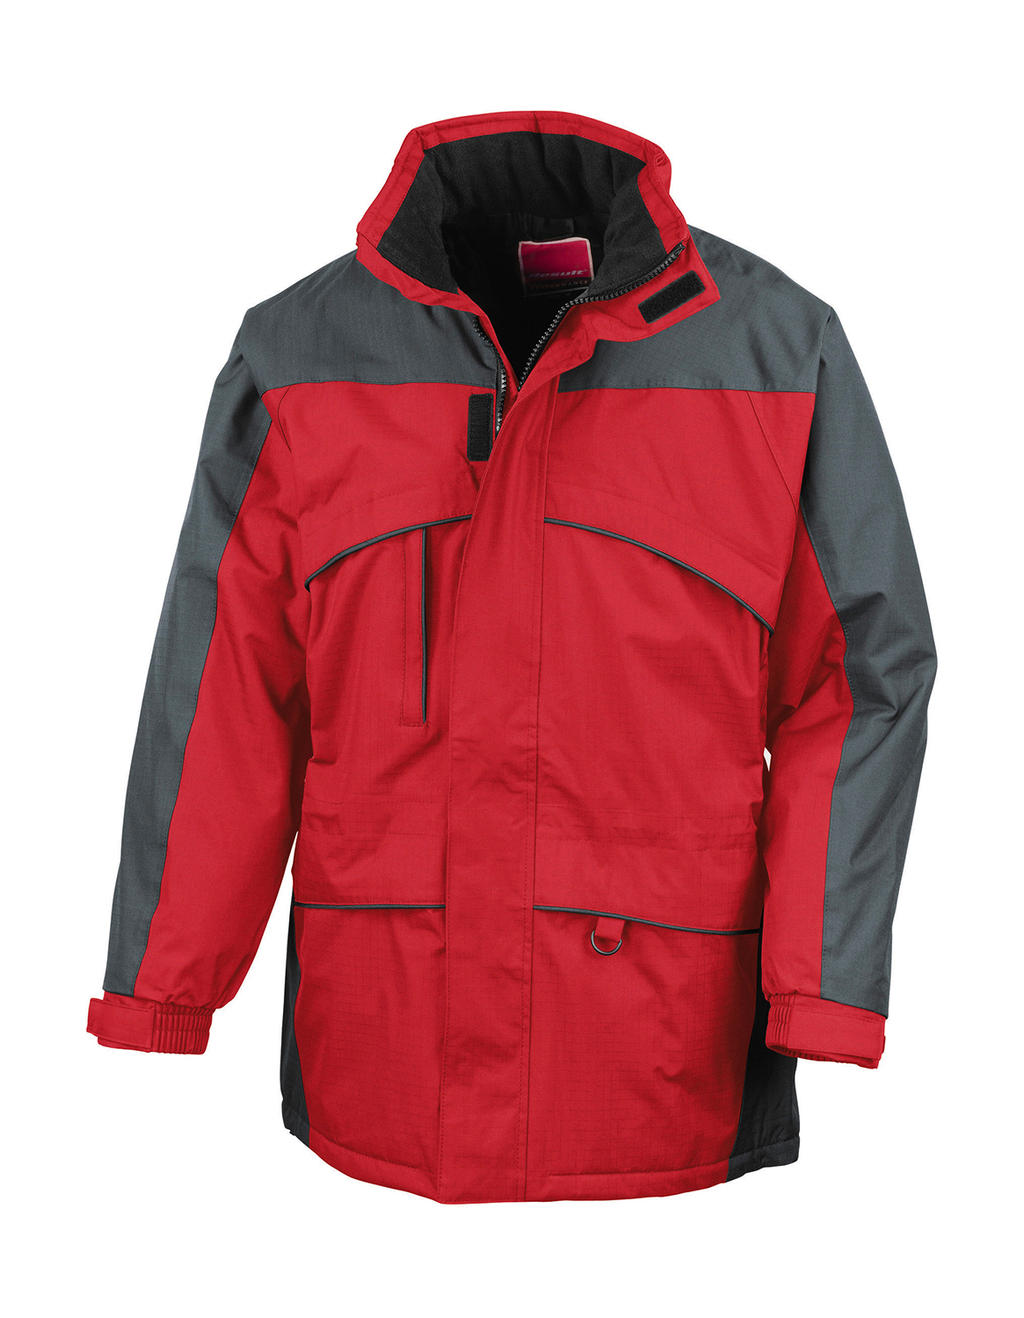  Seneca Hi-Activity Jacket in Farbe Red/Anthracite